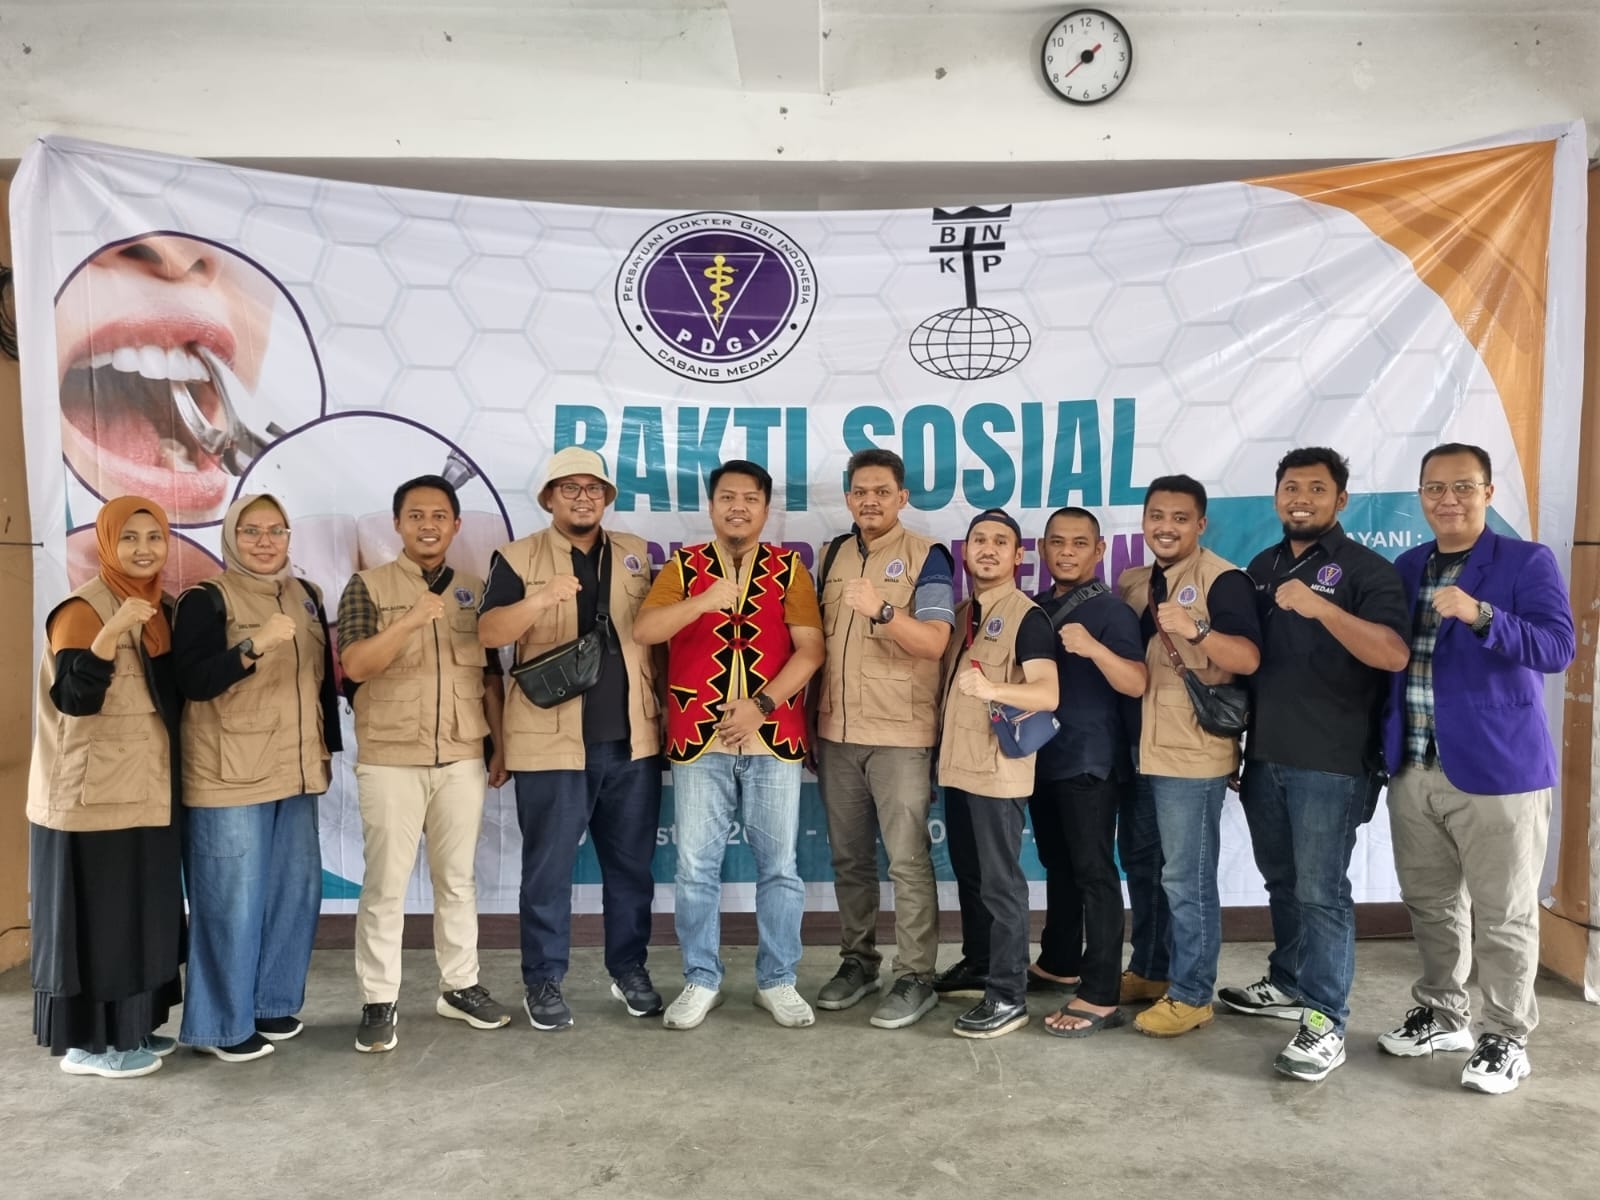 Kolaborasi dengan Gereja BNKP Teladan, PDGI Cabang Medan Laksanakan Bakti Sosial Kesehatan